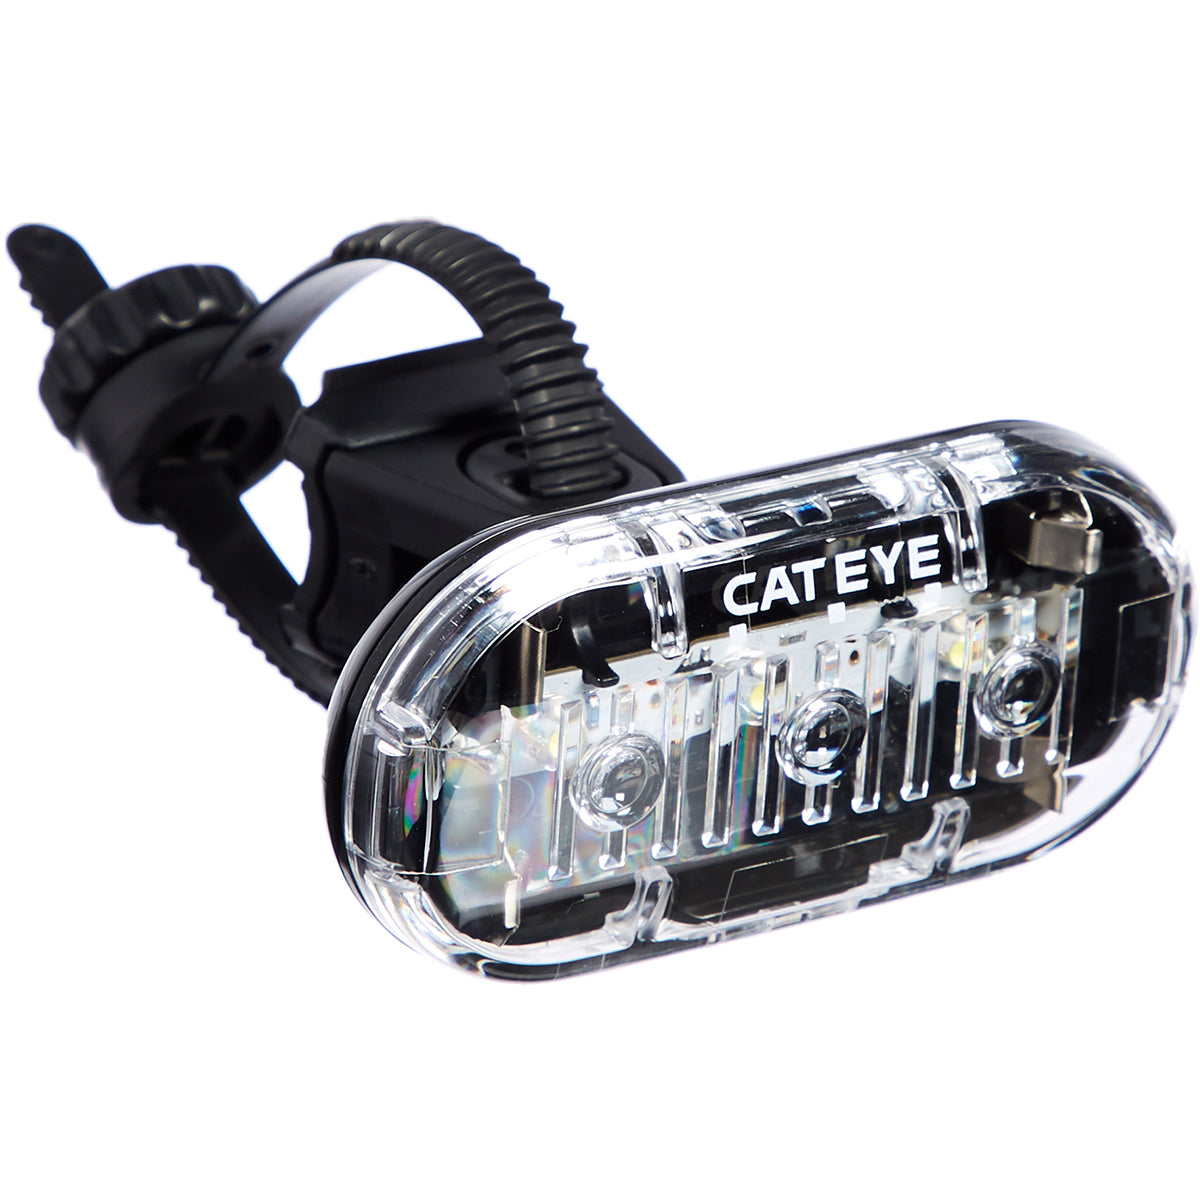 CatEye Omni 3 Cycling Front Safety Light - TL-LD135-F CatEye